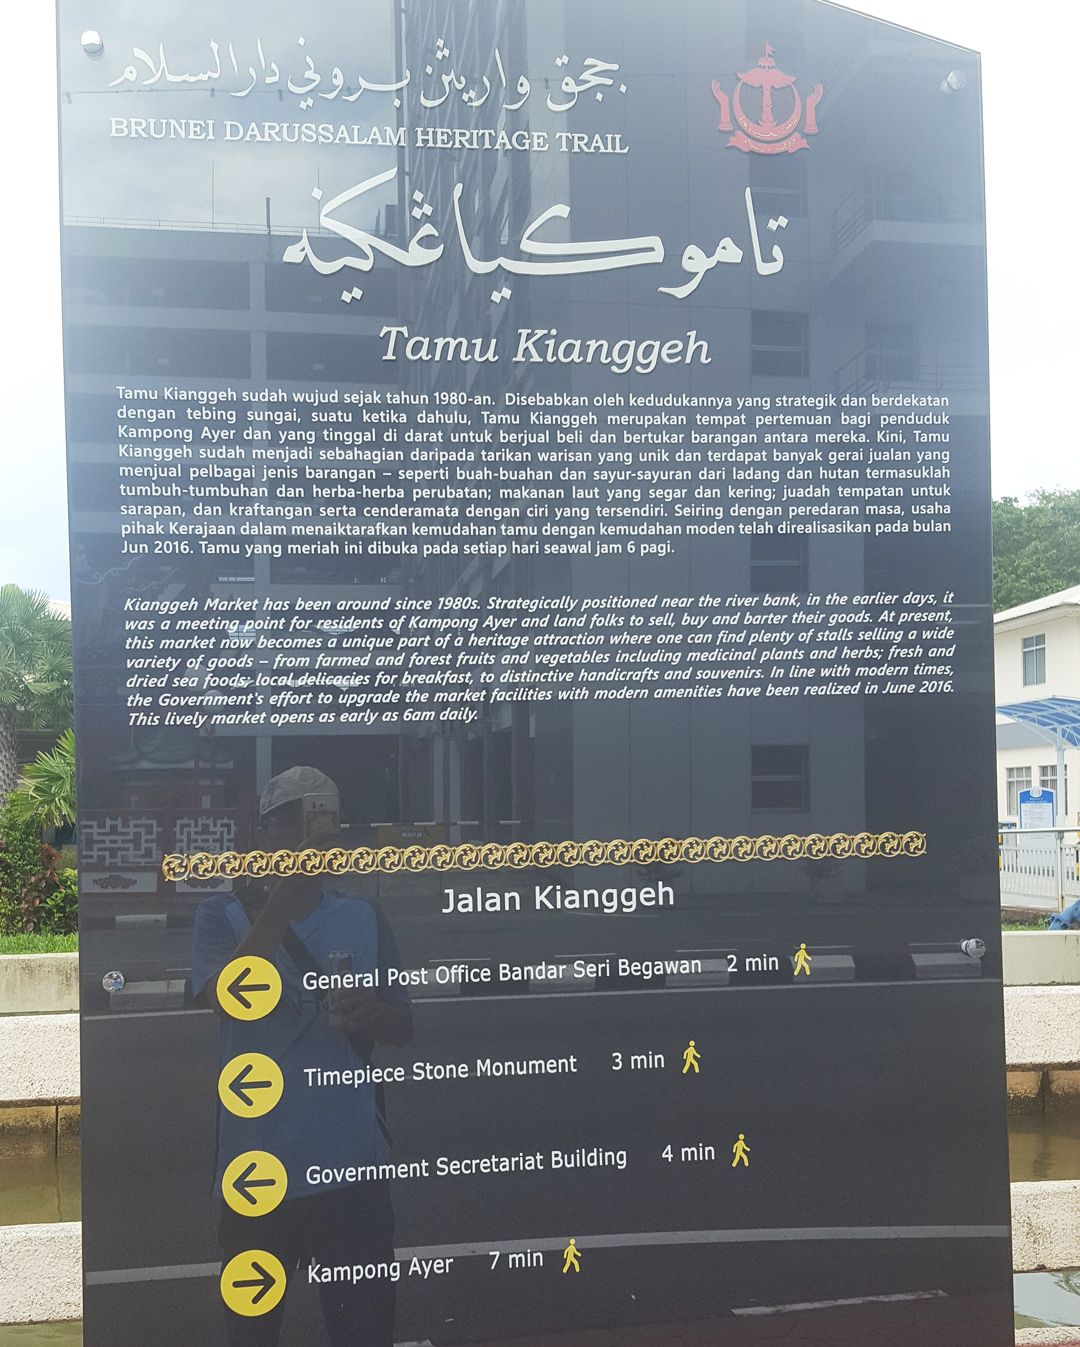 Du lịch bụi Brunei - Chợ Kianggeh Market (Tamu Kianggeh)